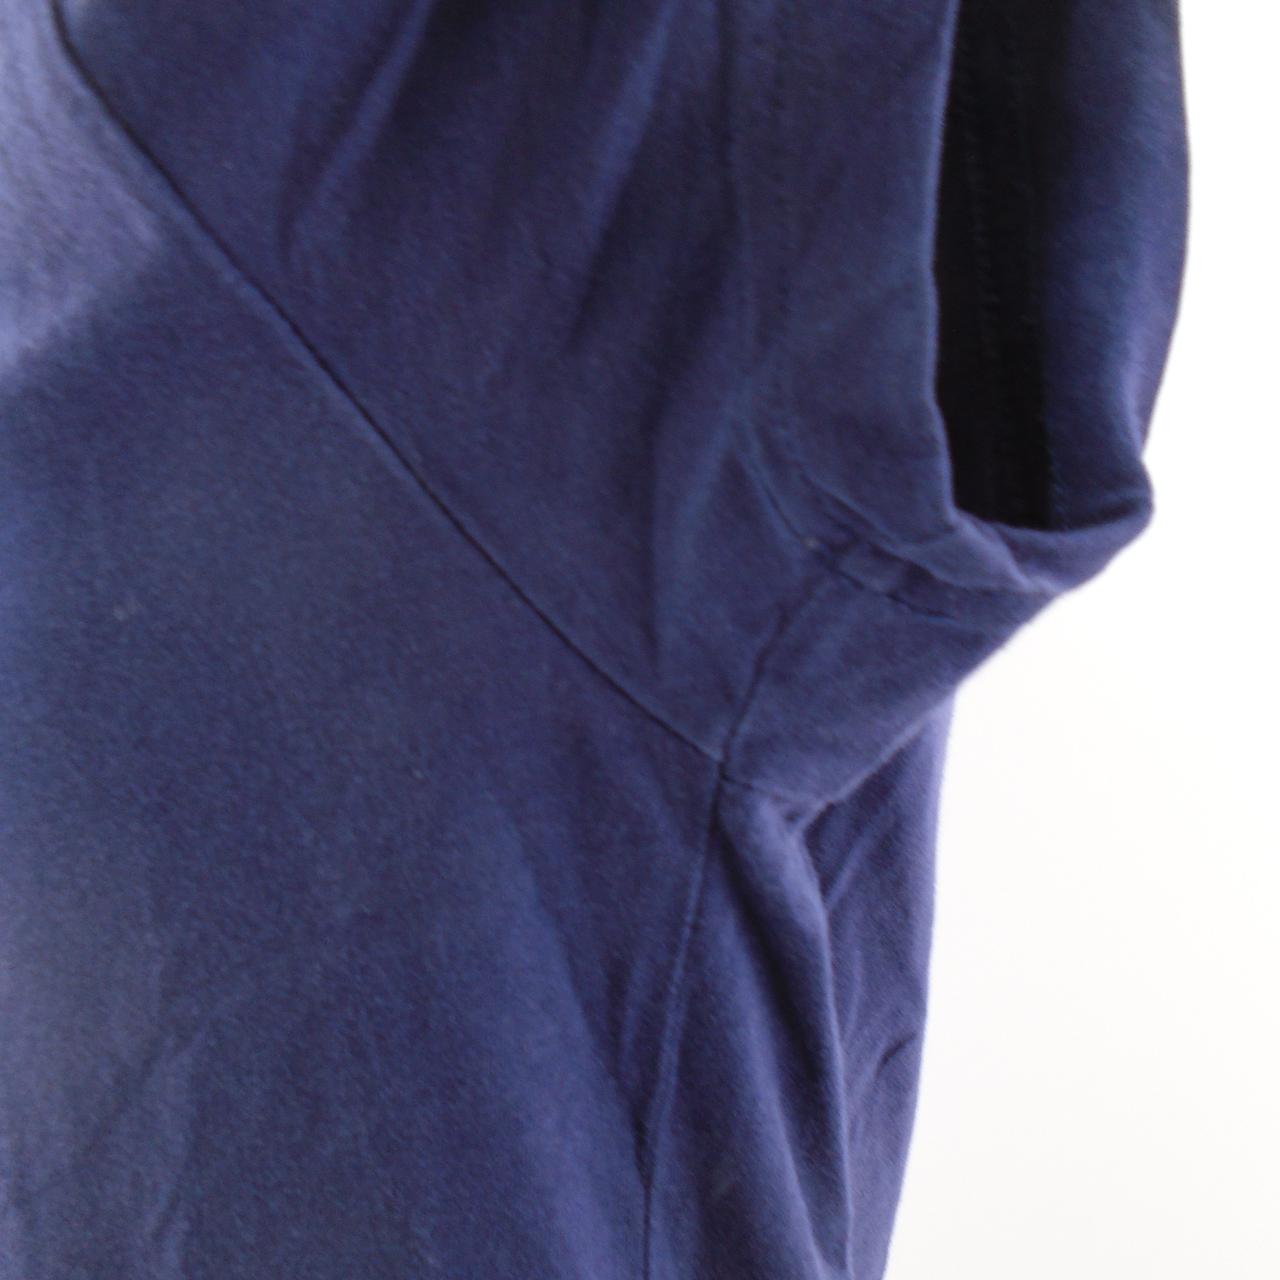 Camiseta Hombre Tommy Hilfiger. Azul oscuro. M. Usado. Bien